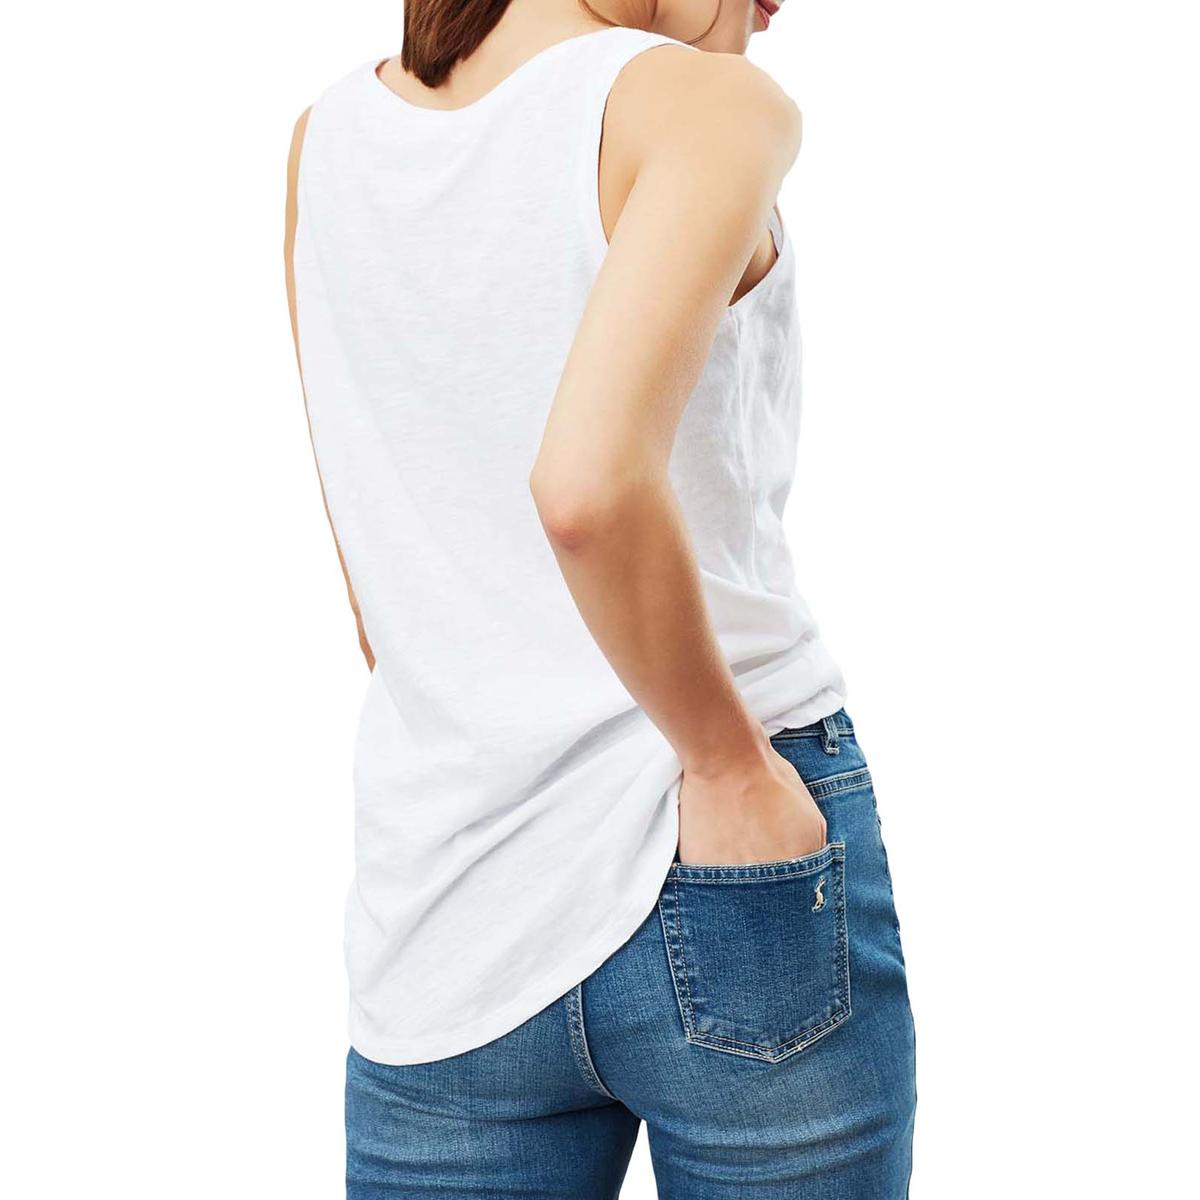 Joules Womens Bo Cotton Slub Sleeveless Tank Top Shirt BHFO 3603 | eBay